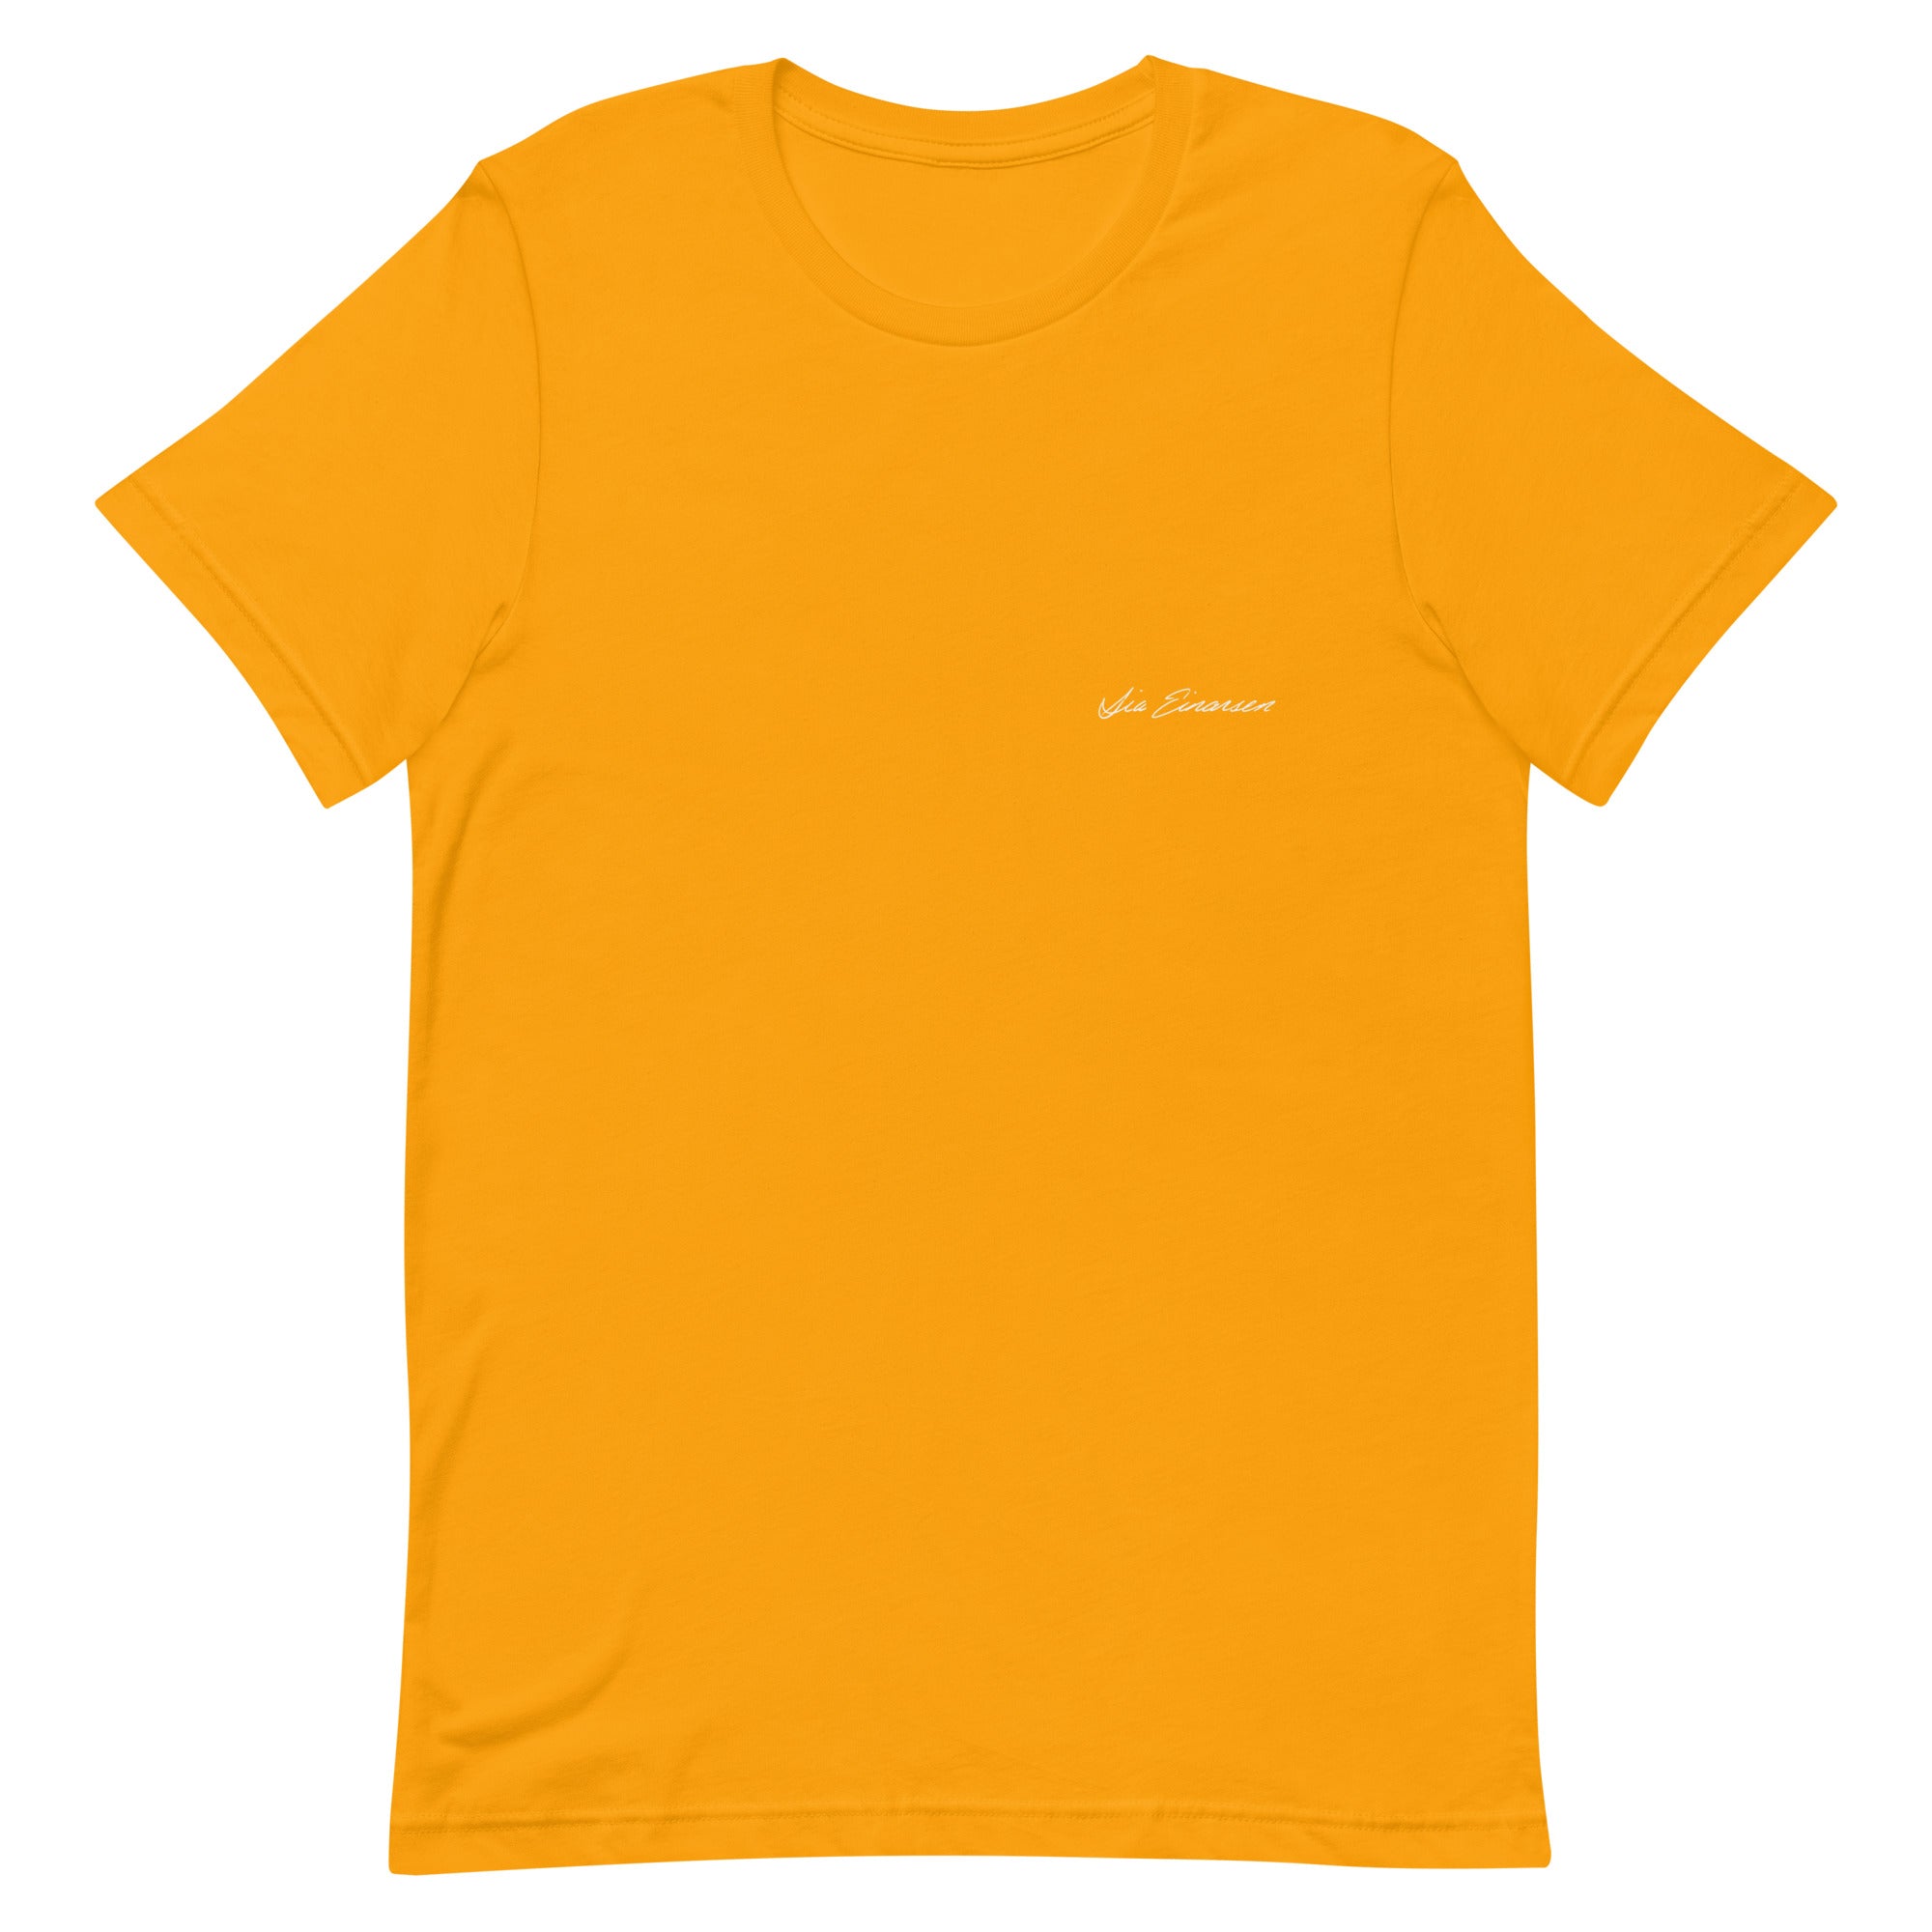 Tia Einarsen - Unisex t-shirt